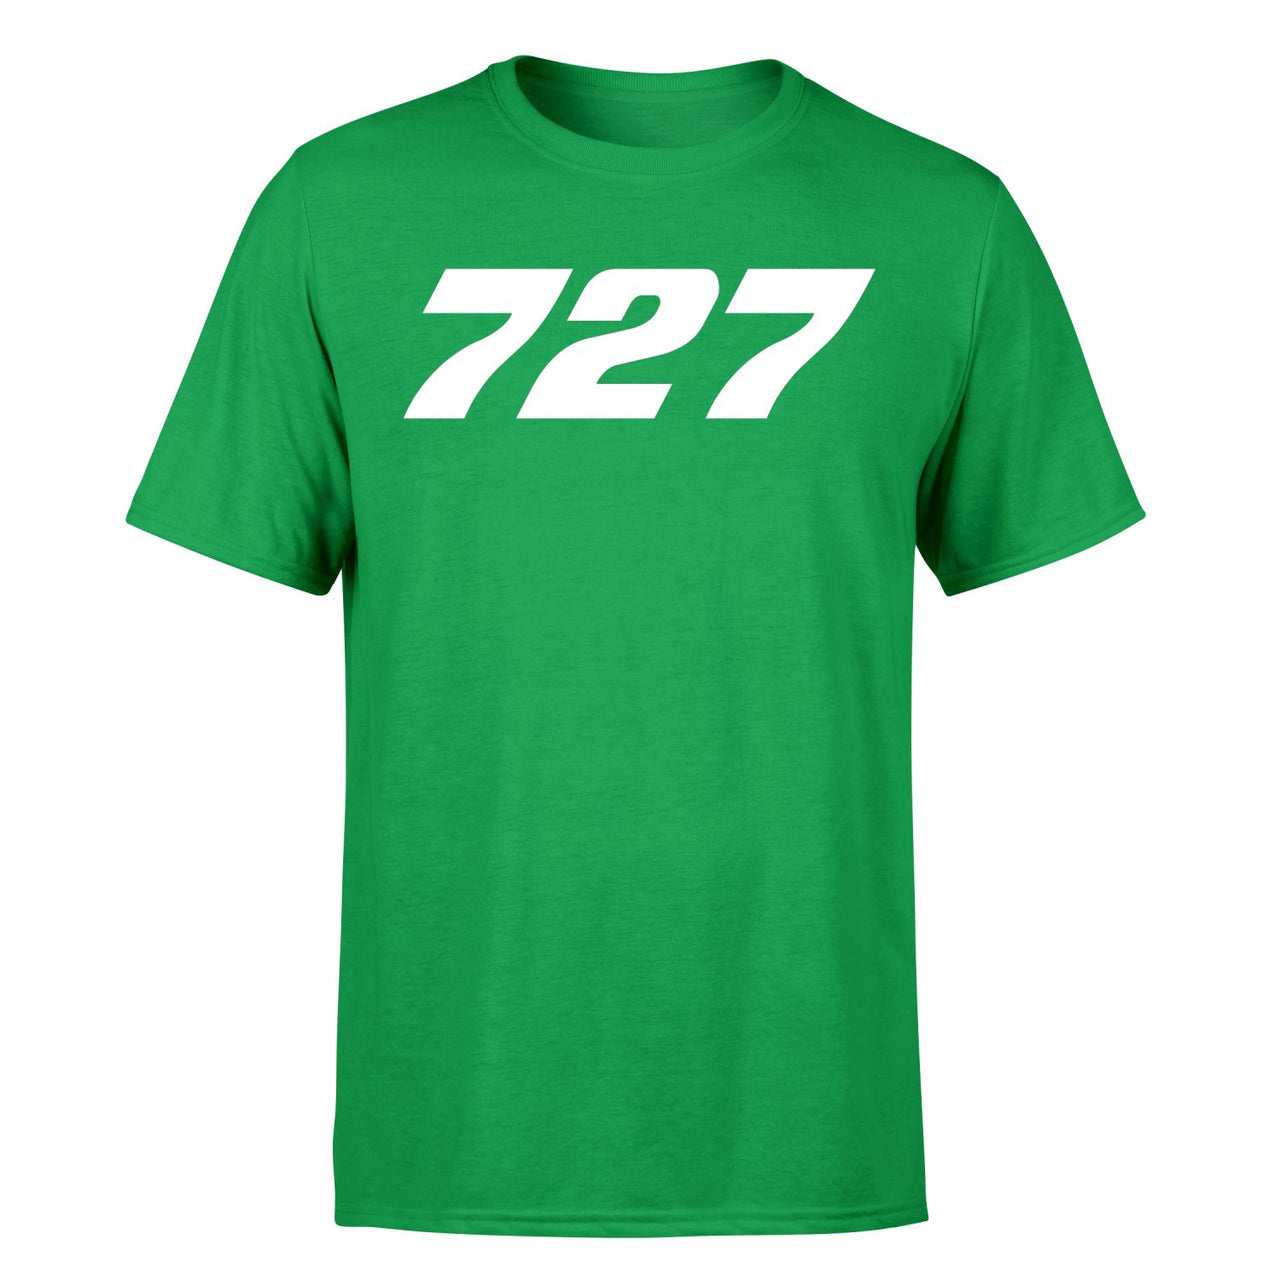 727 Flat Text Designed T-Shirts